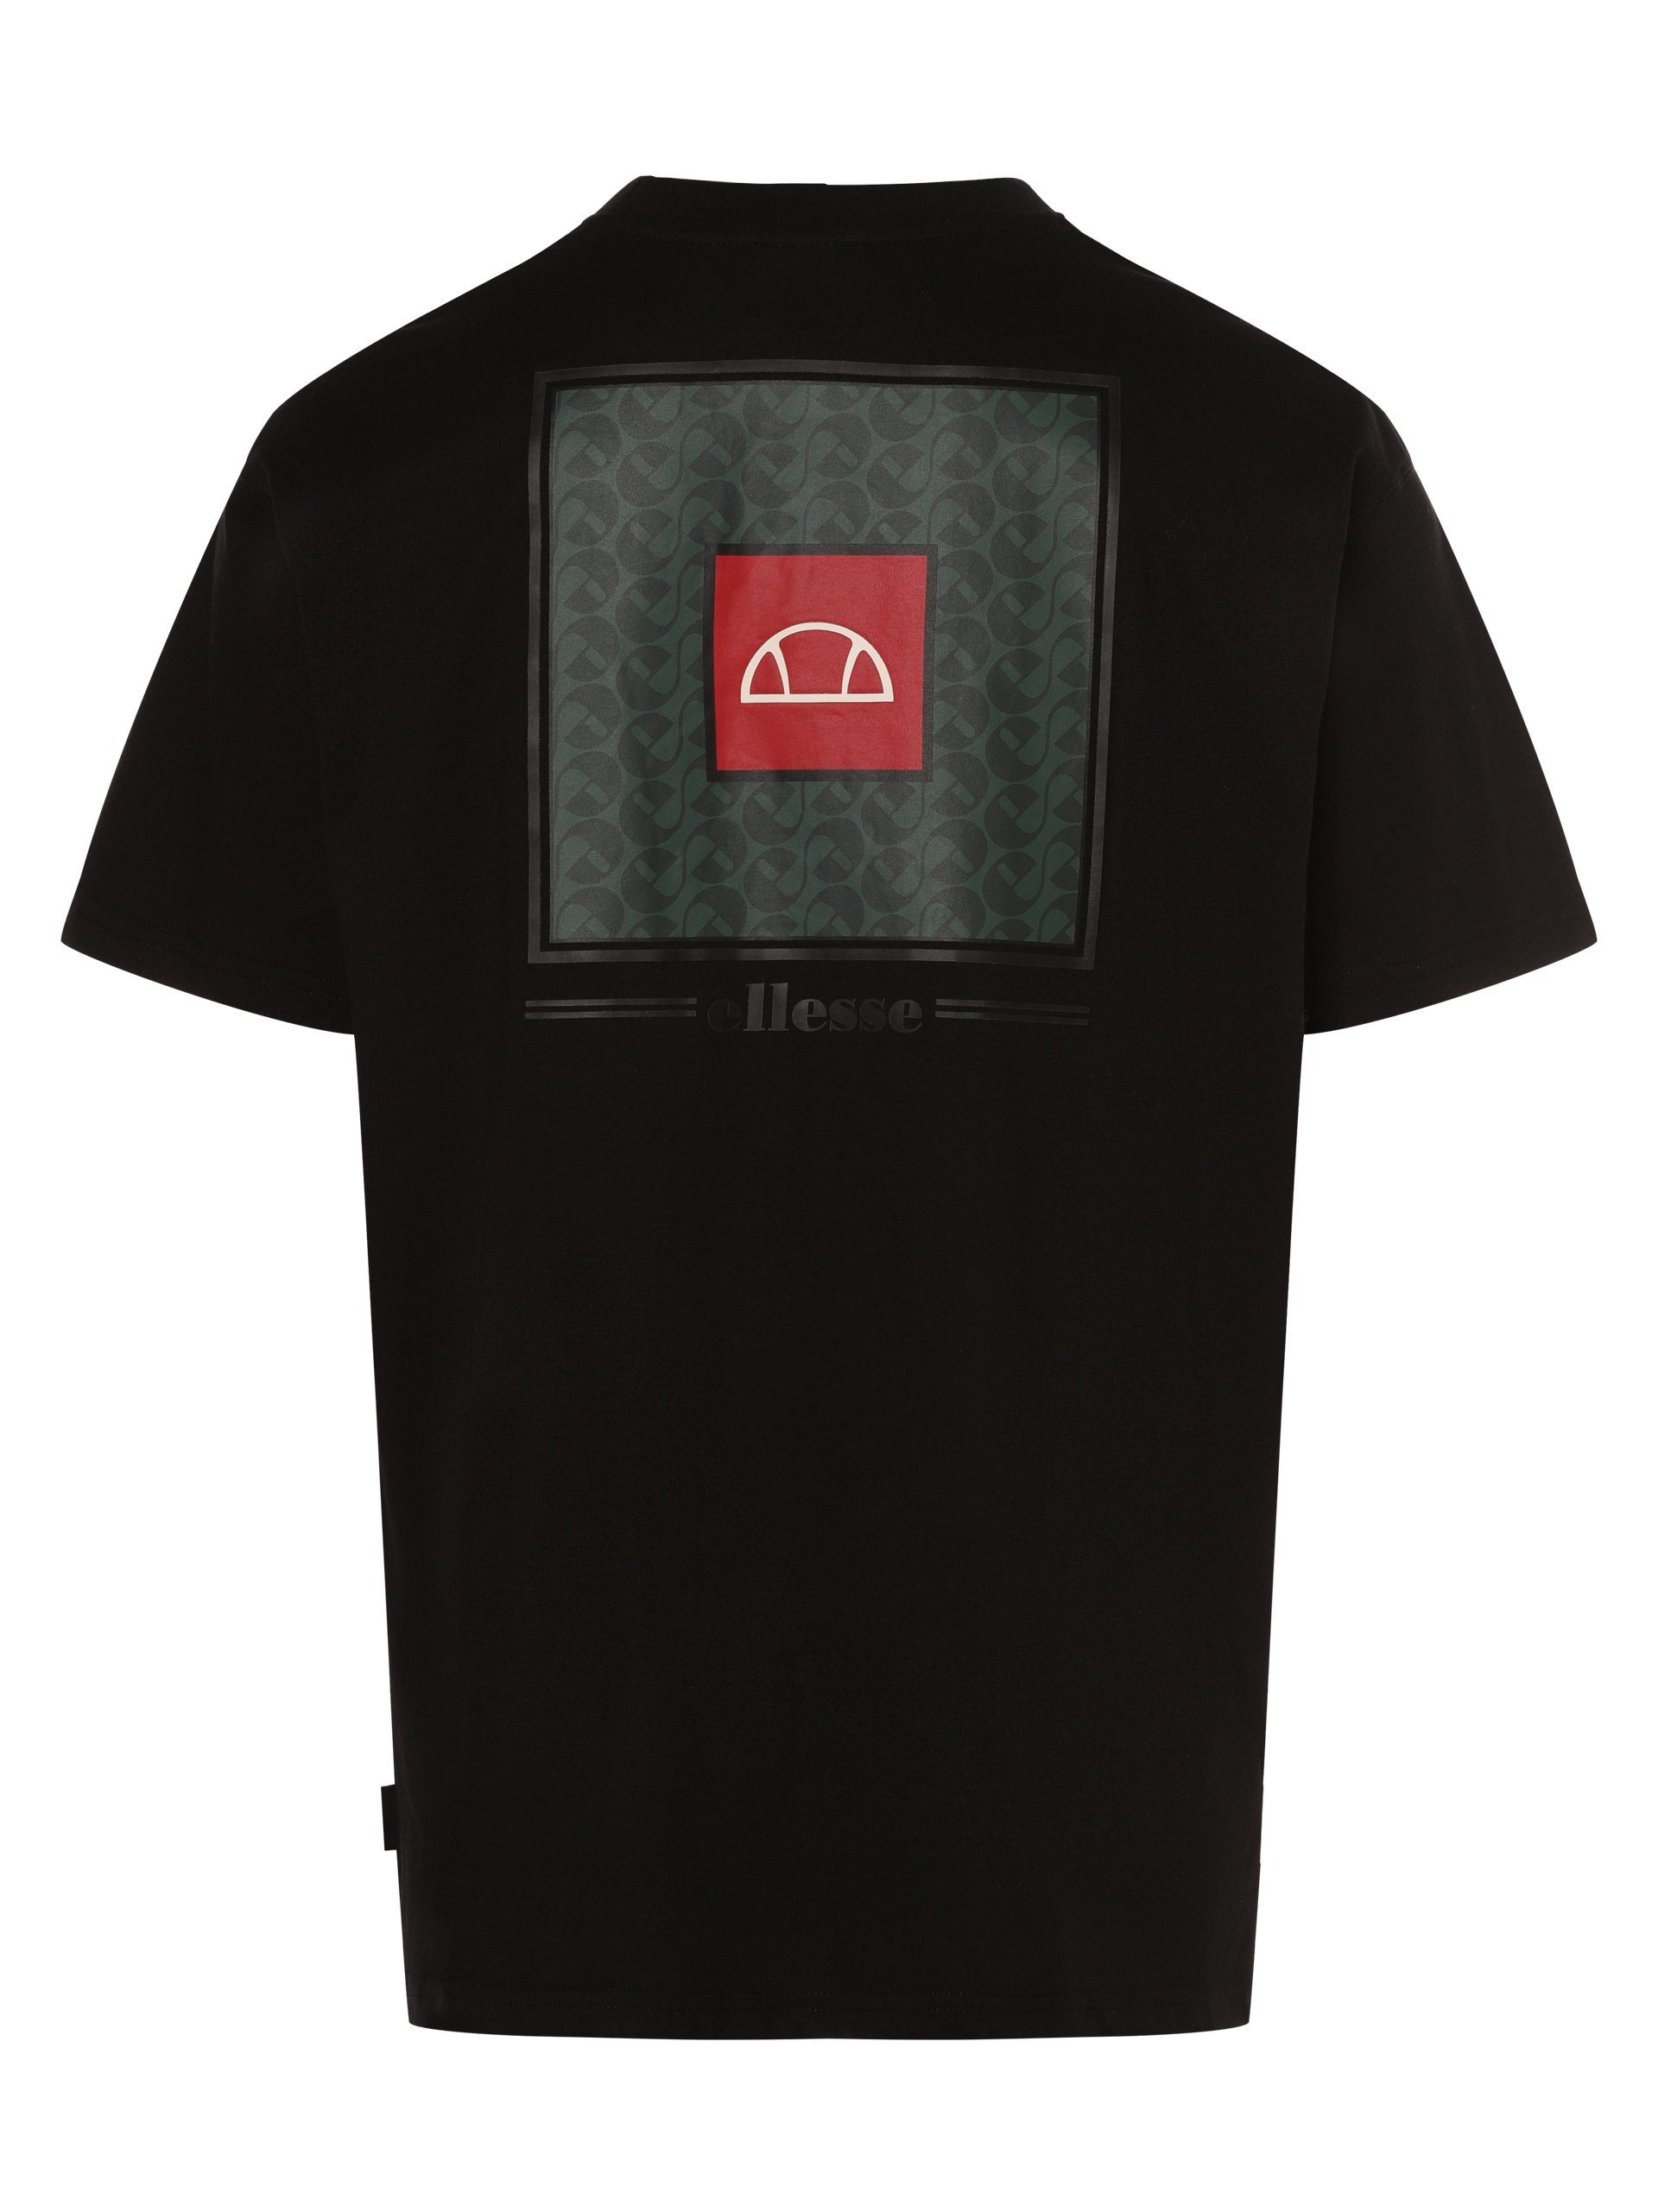 T-Shirt Ellesse Portier schwarz